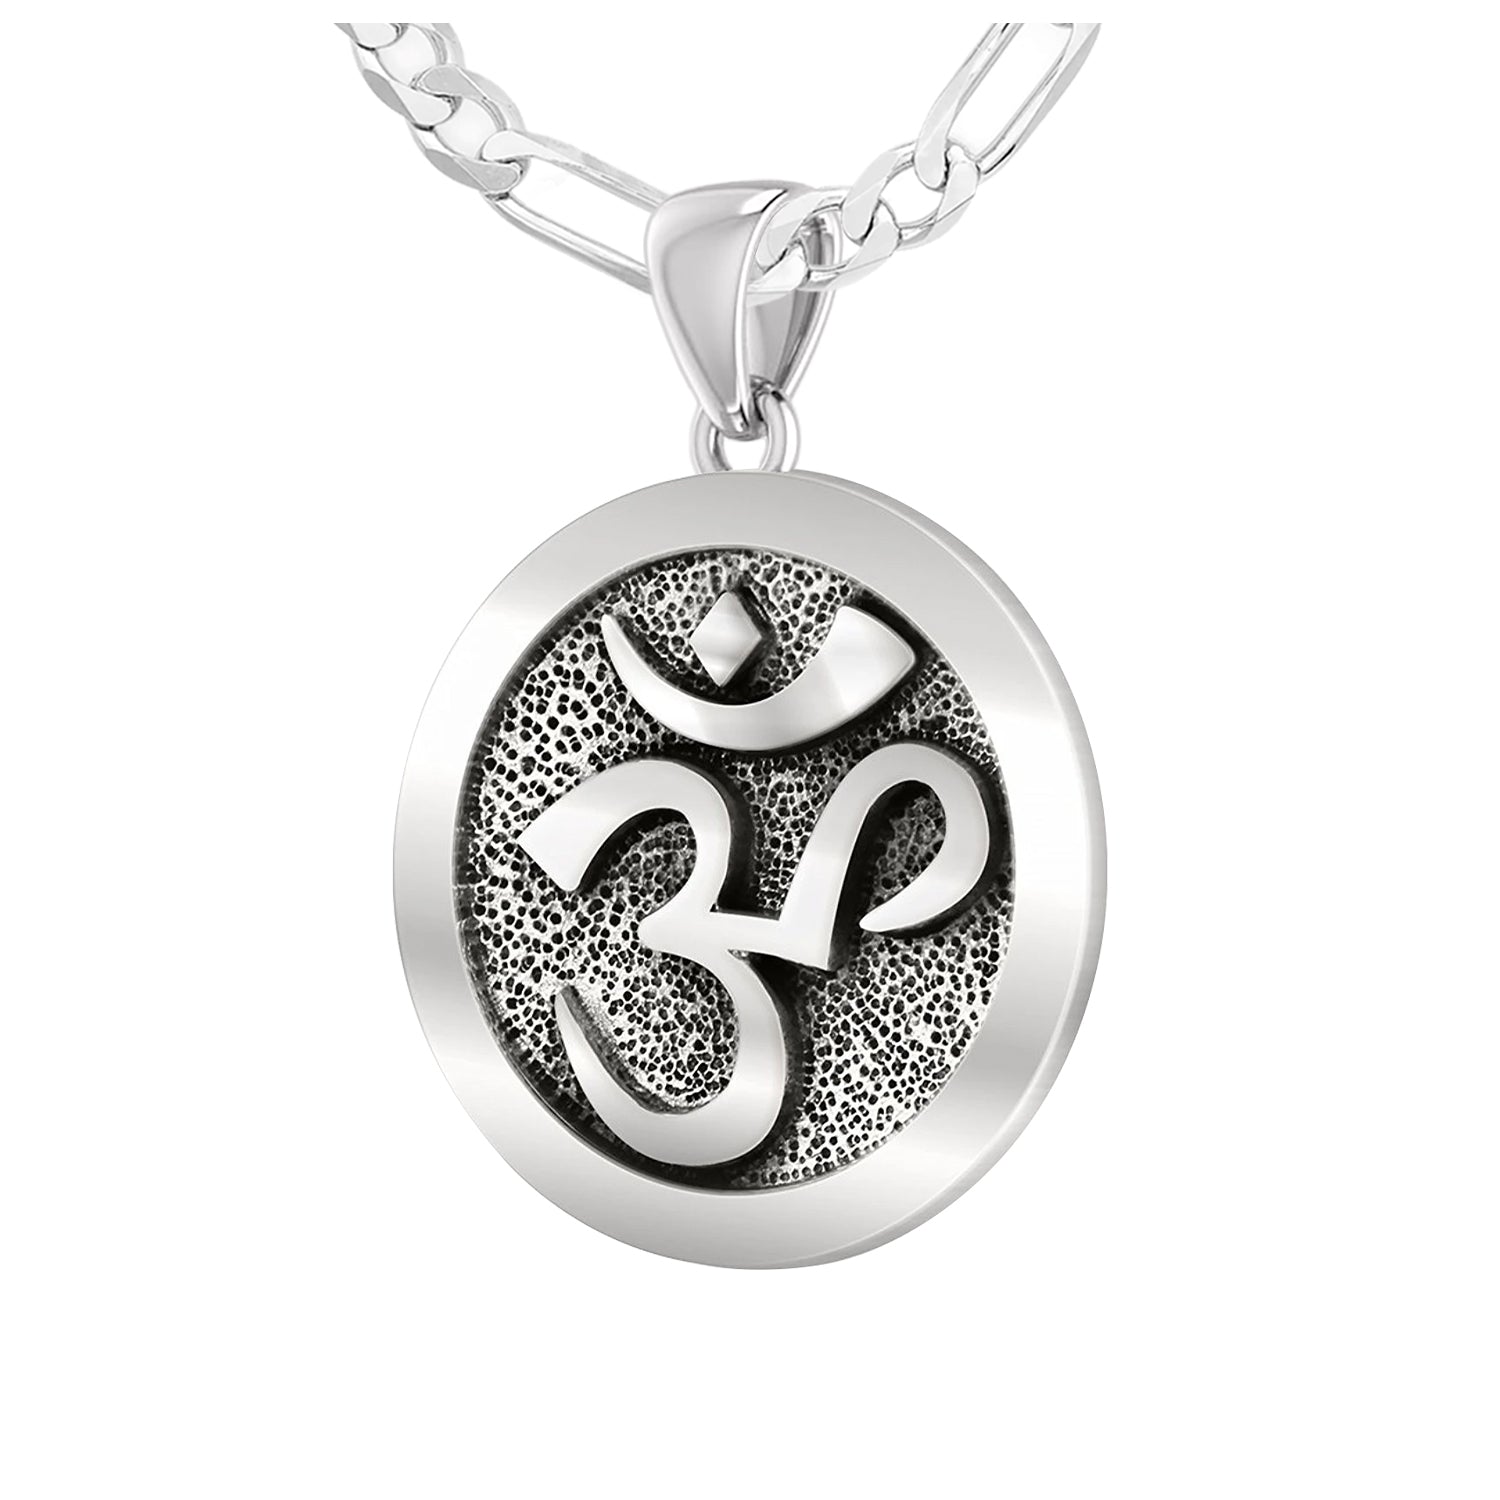 Pendant Necklace With Hindu Om Symbol